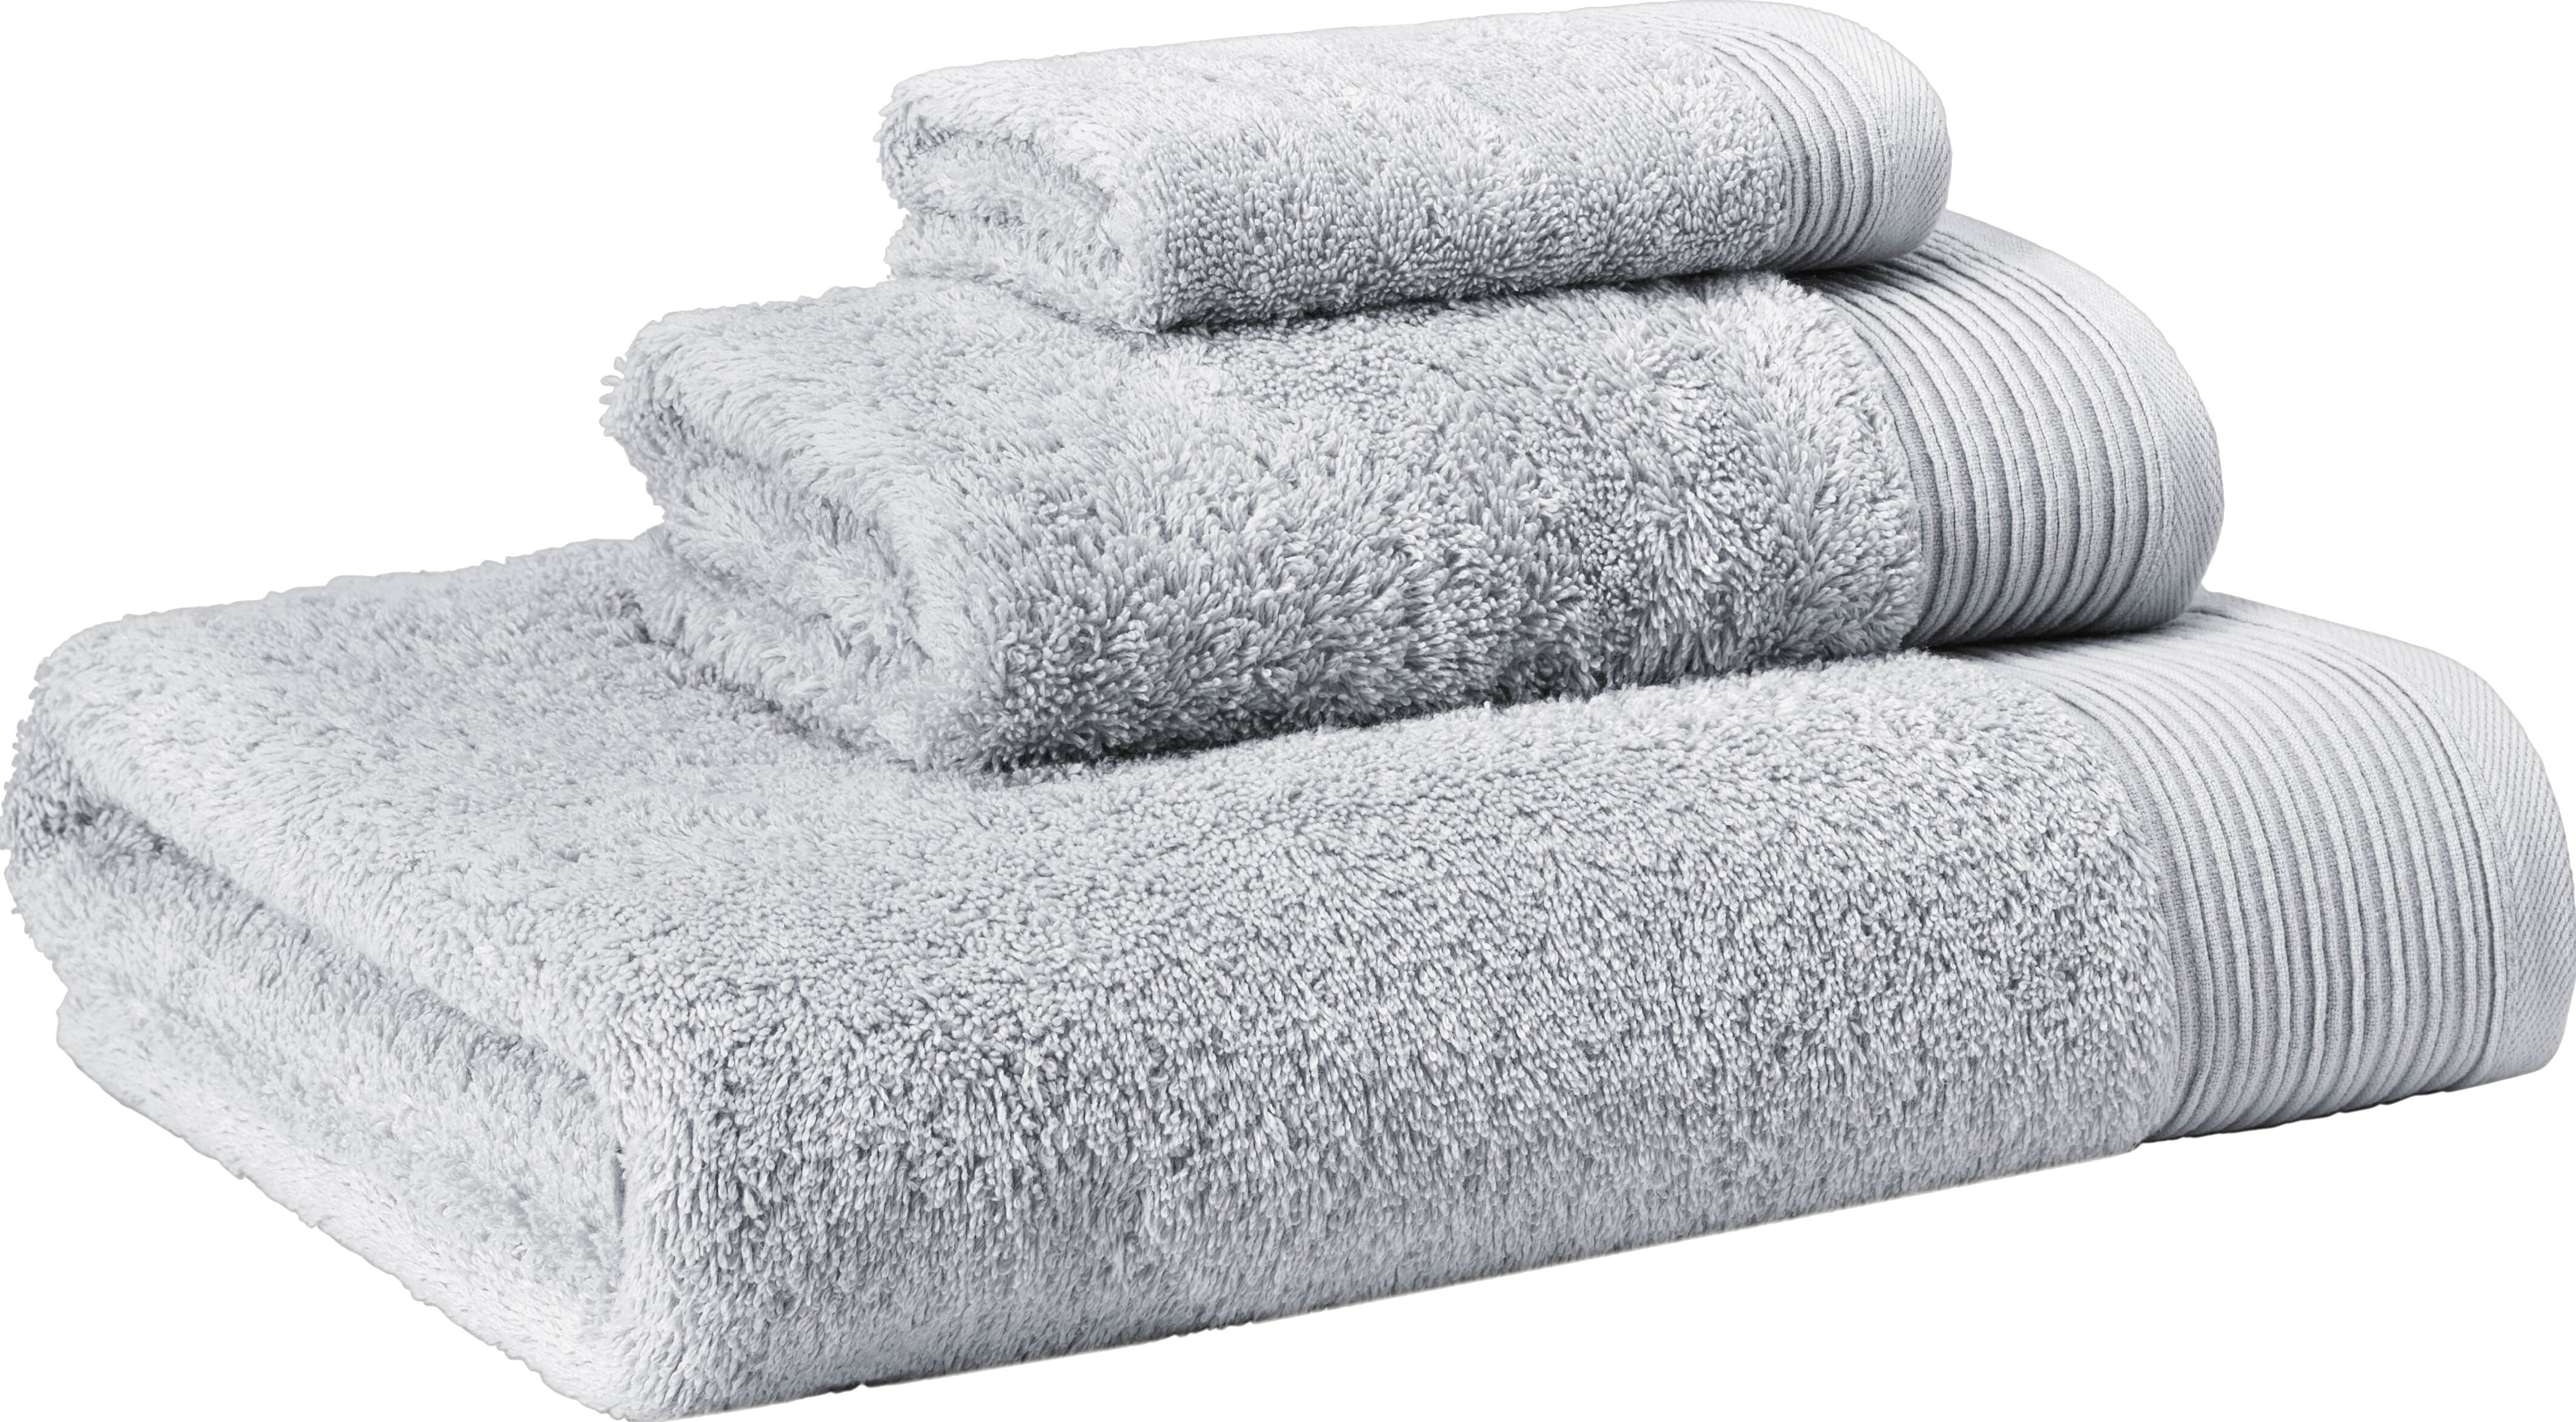 Turkish Cotton Bath Towels